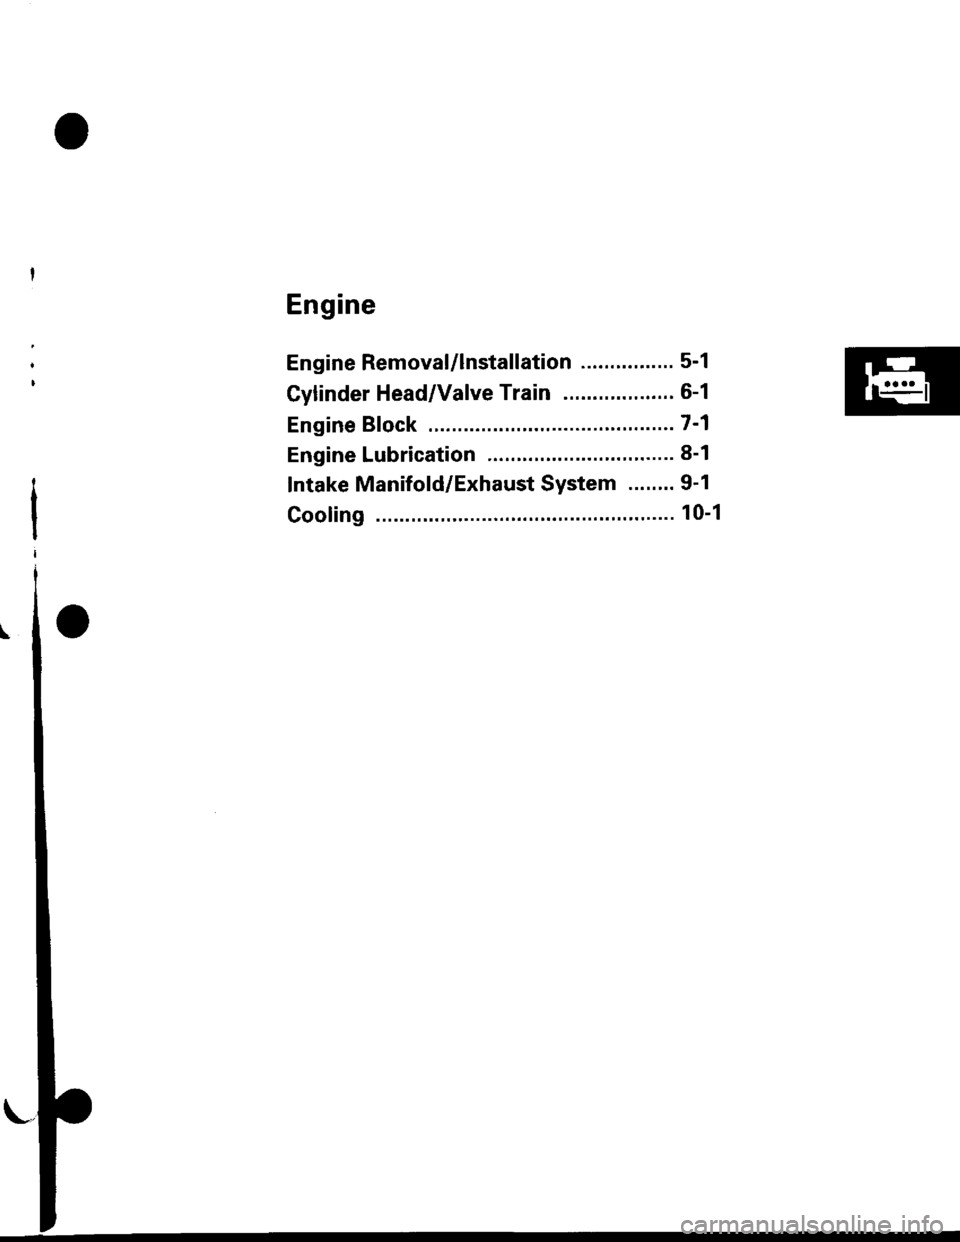 HONDA CIVIC 1999 6.G Service Manual Engine
Engine Removal/lnstallation ................ 5-1
Gylinder Head/Valve Train ................... 6-1
Engine Bfock .......... ...........7-1
Engine Lubrication ........... 8-1
Intake Manifold/Exha